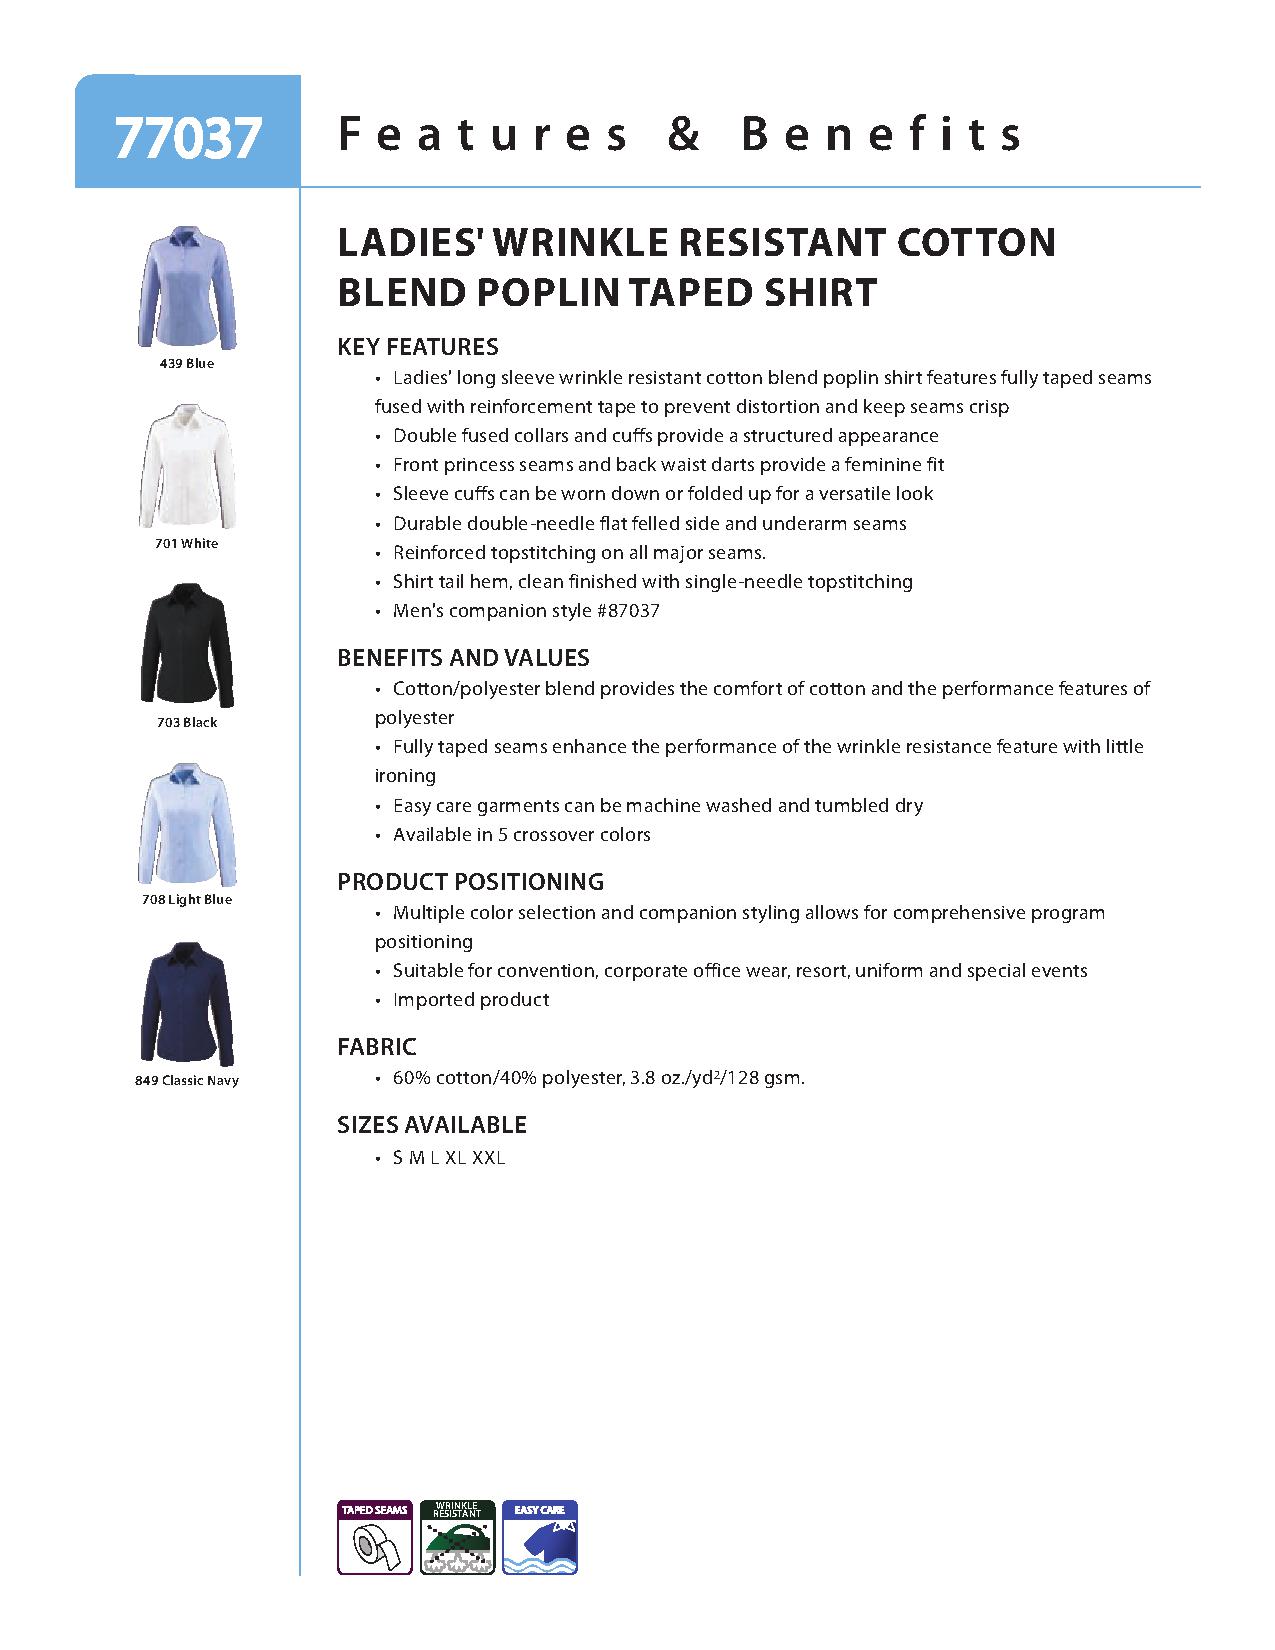 Ash City Wrinkle Resistant 77037 - Luster Ladies' Wrinkle Resistant Cotton Blend Poplin Taped Shirt